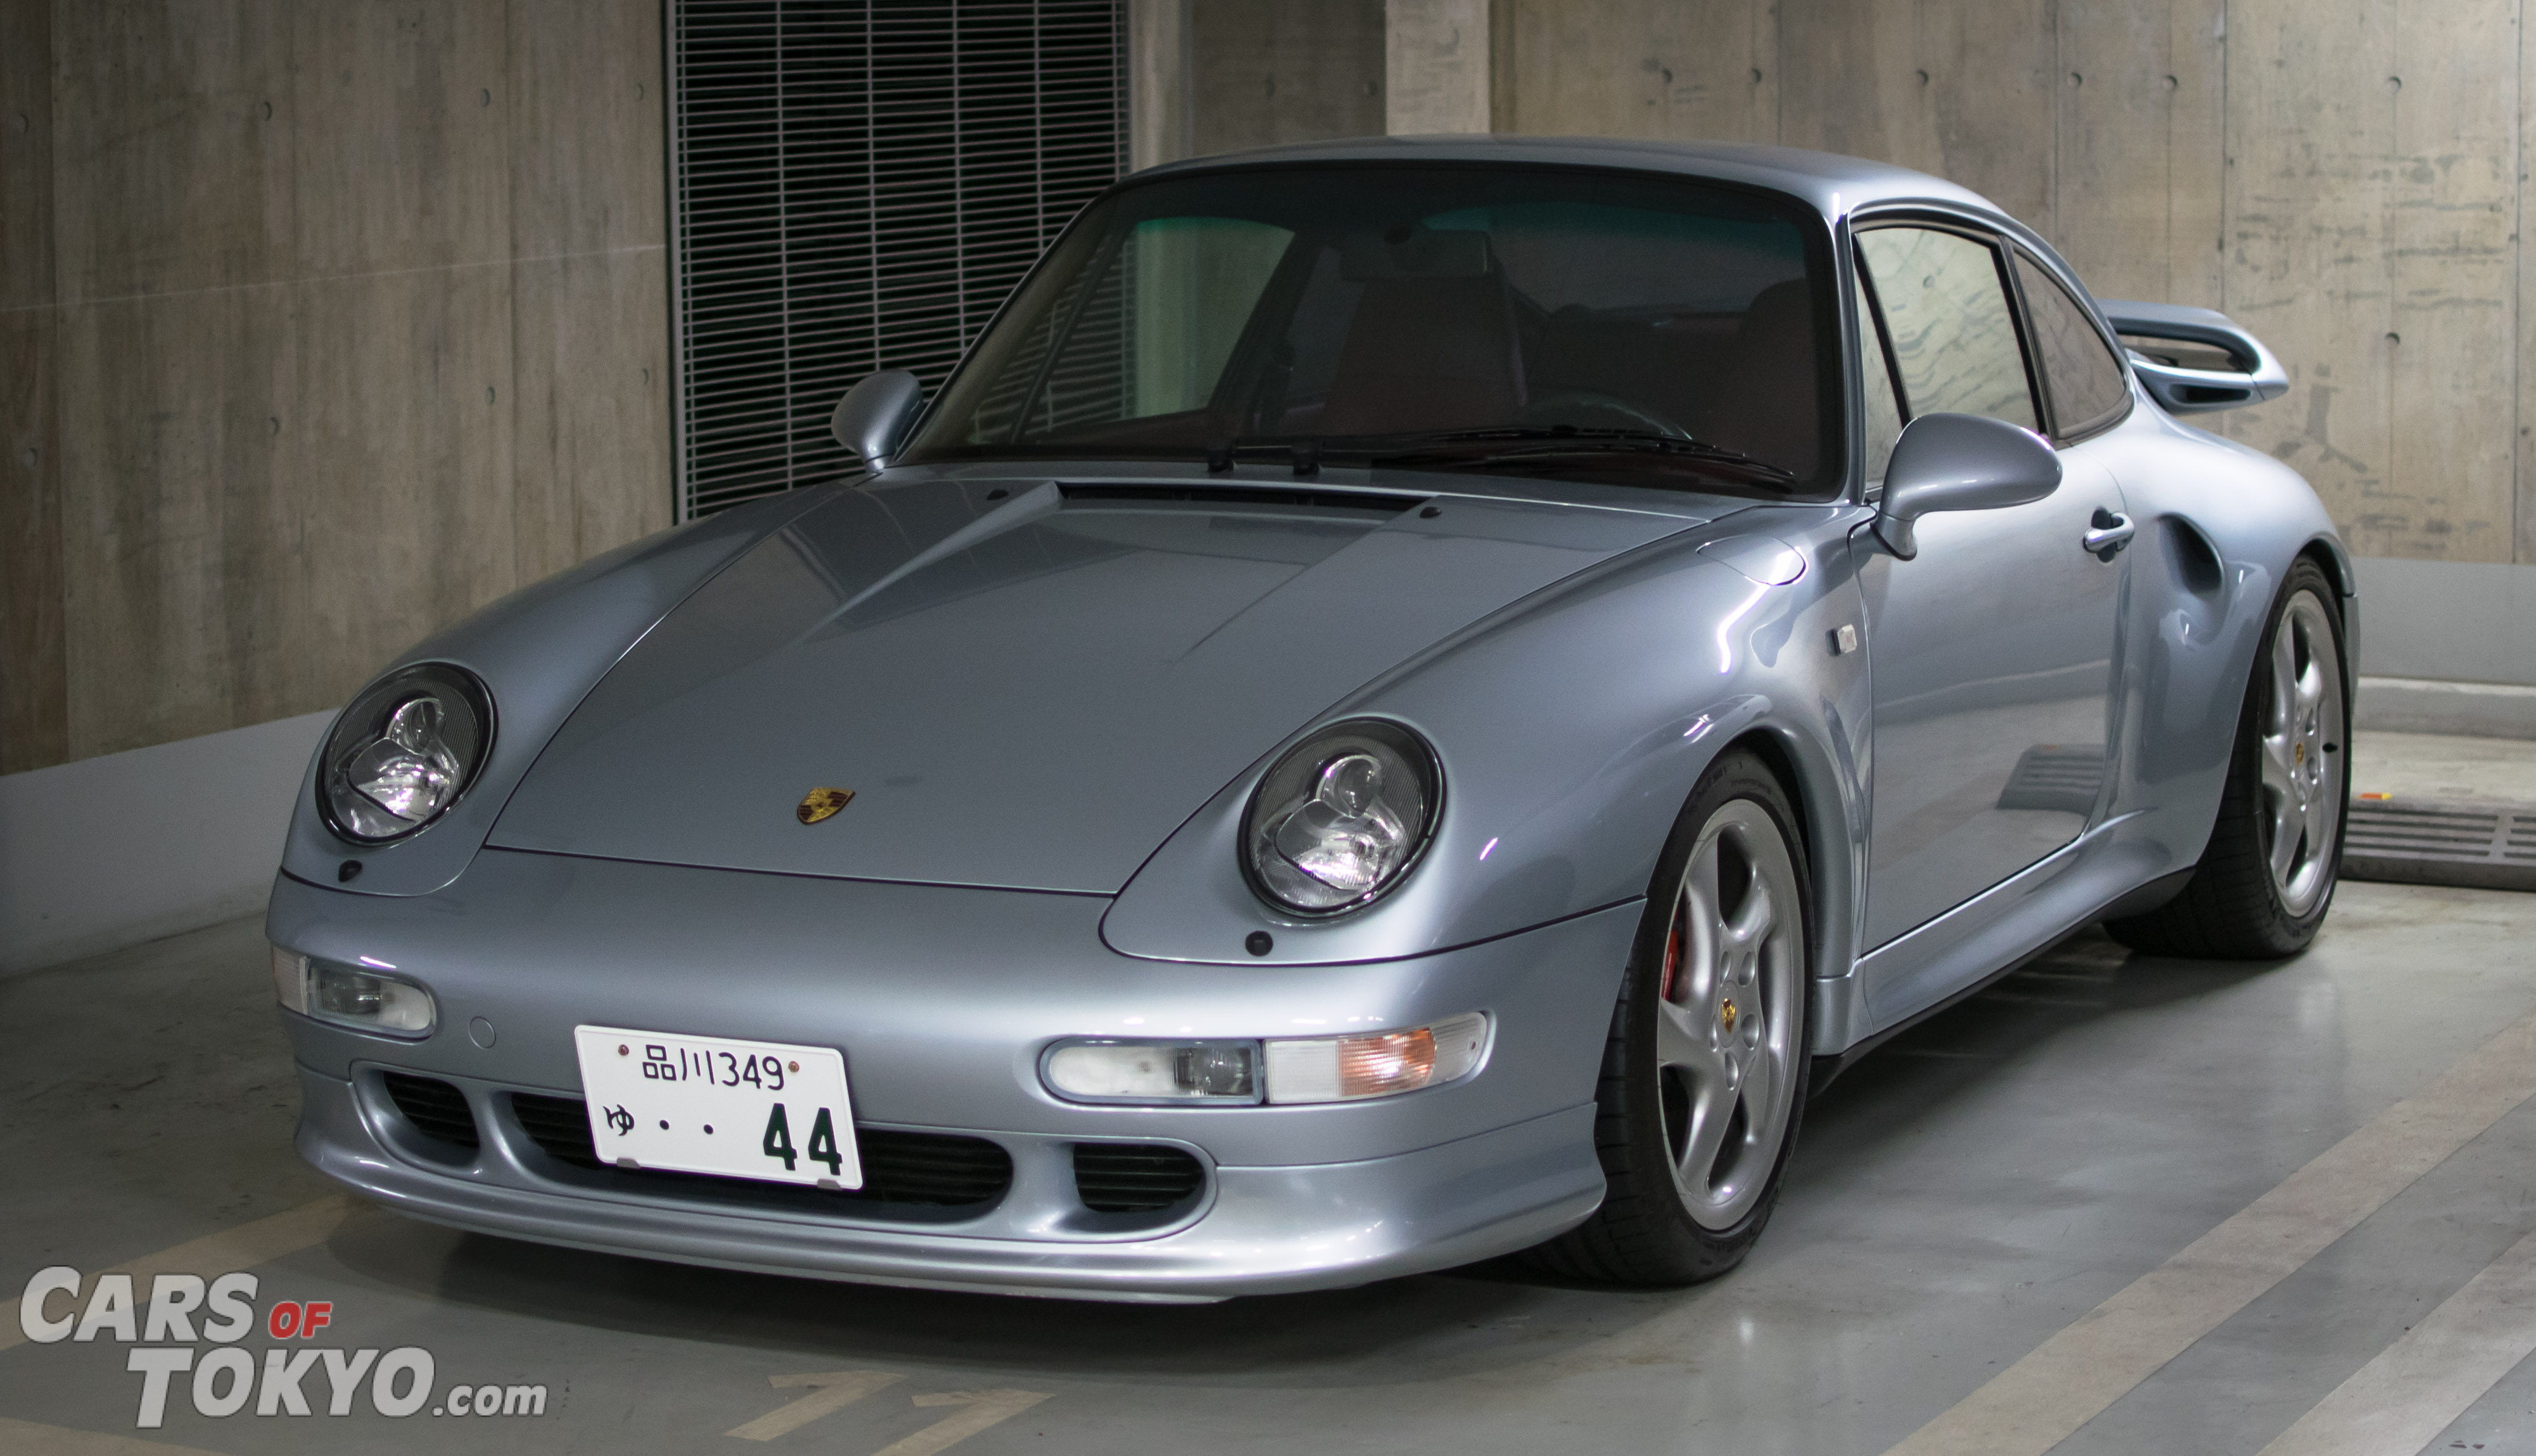 Cars of Tokyo Porsche 911 993